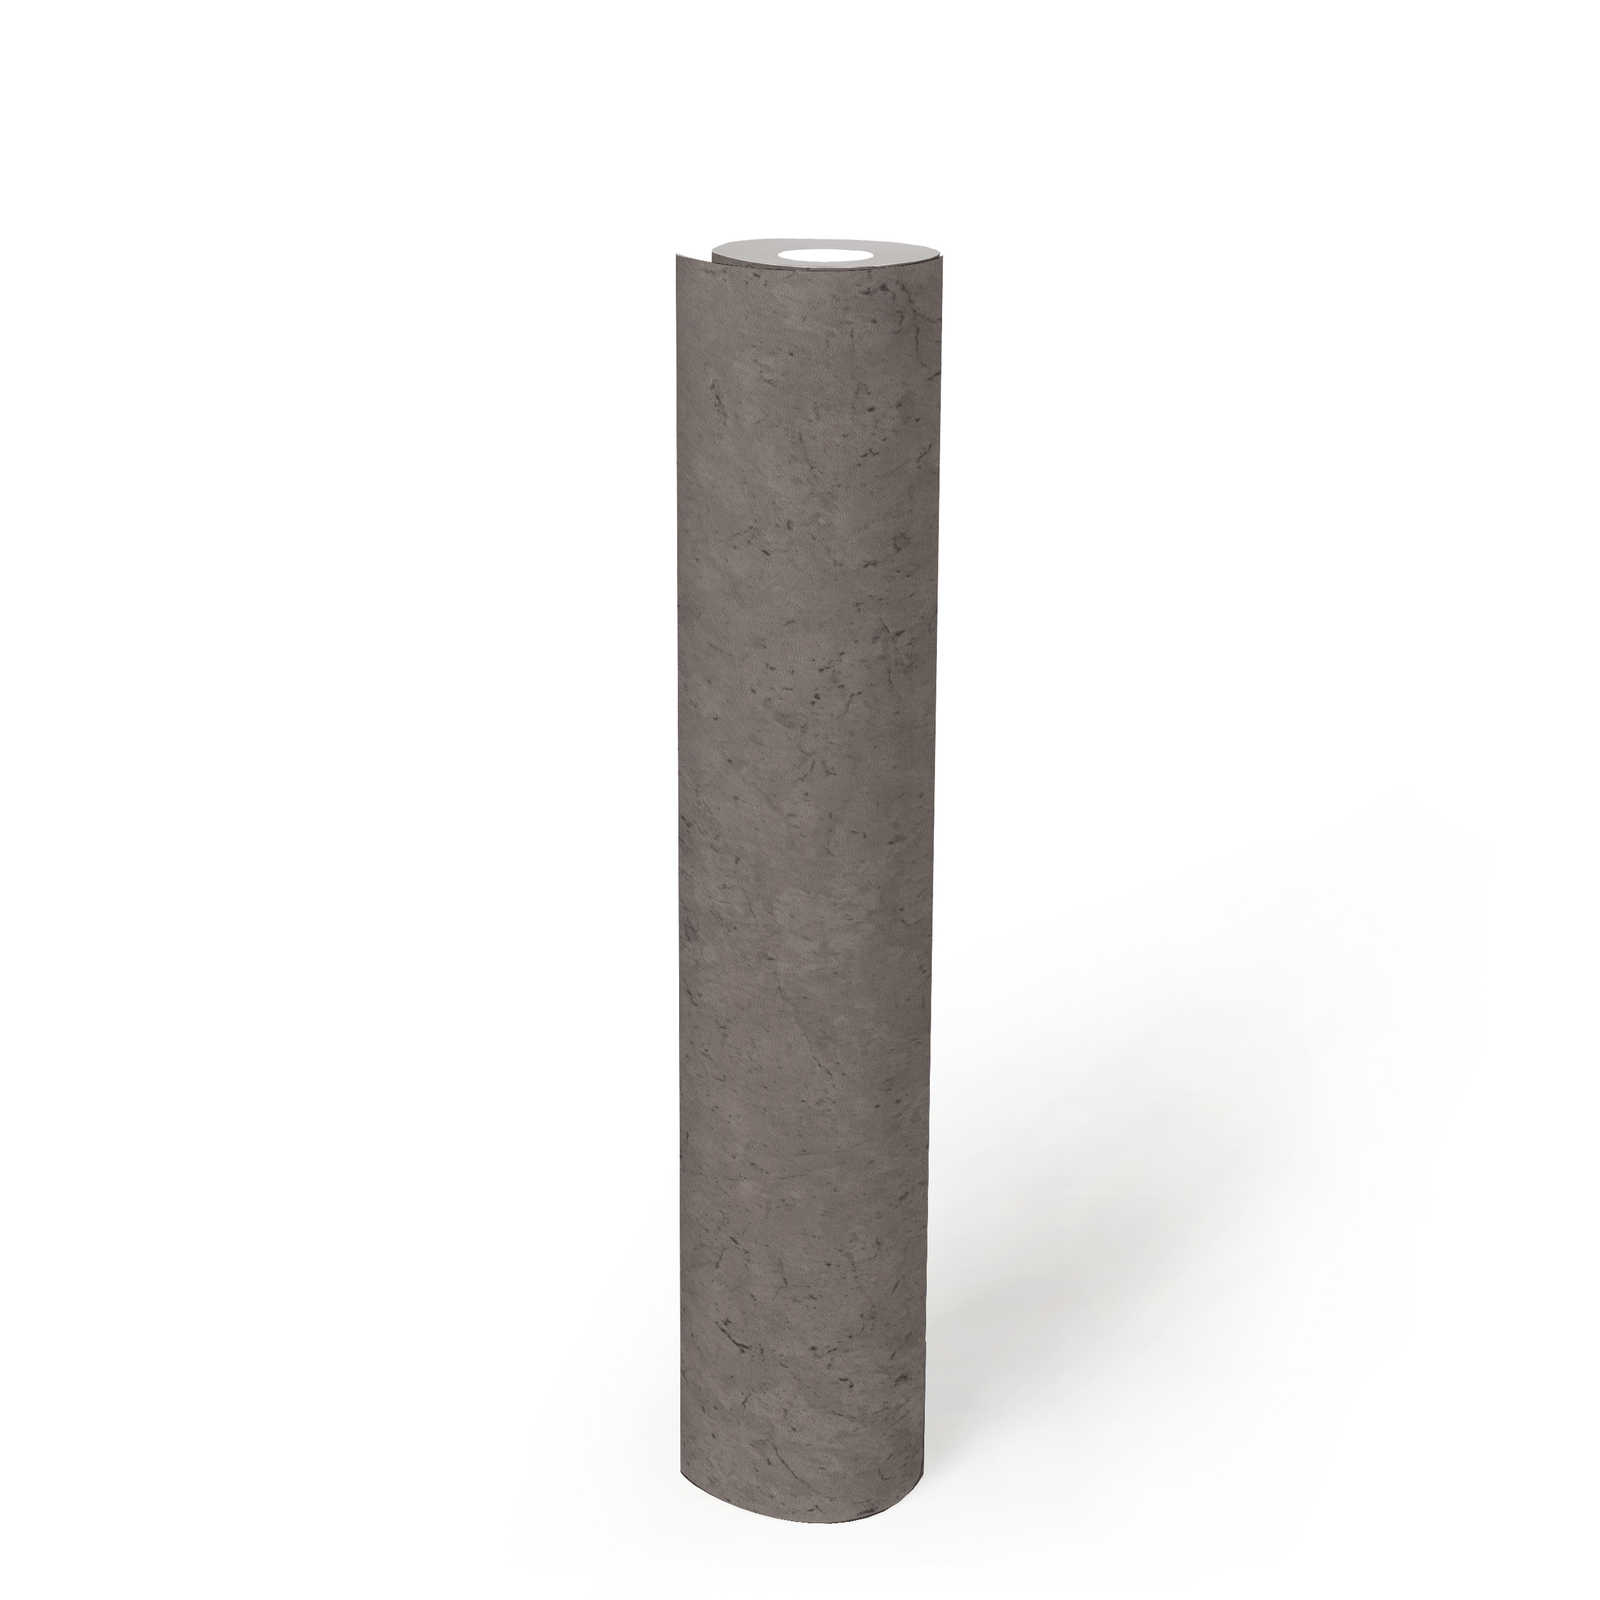             Dark plain wallpaper with subtle concrete look - grey
        